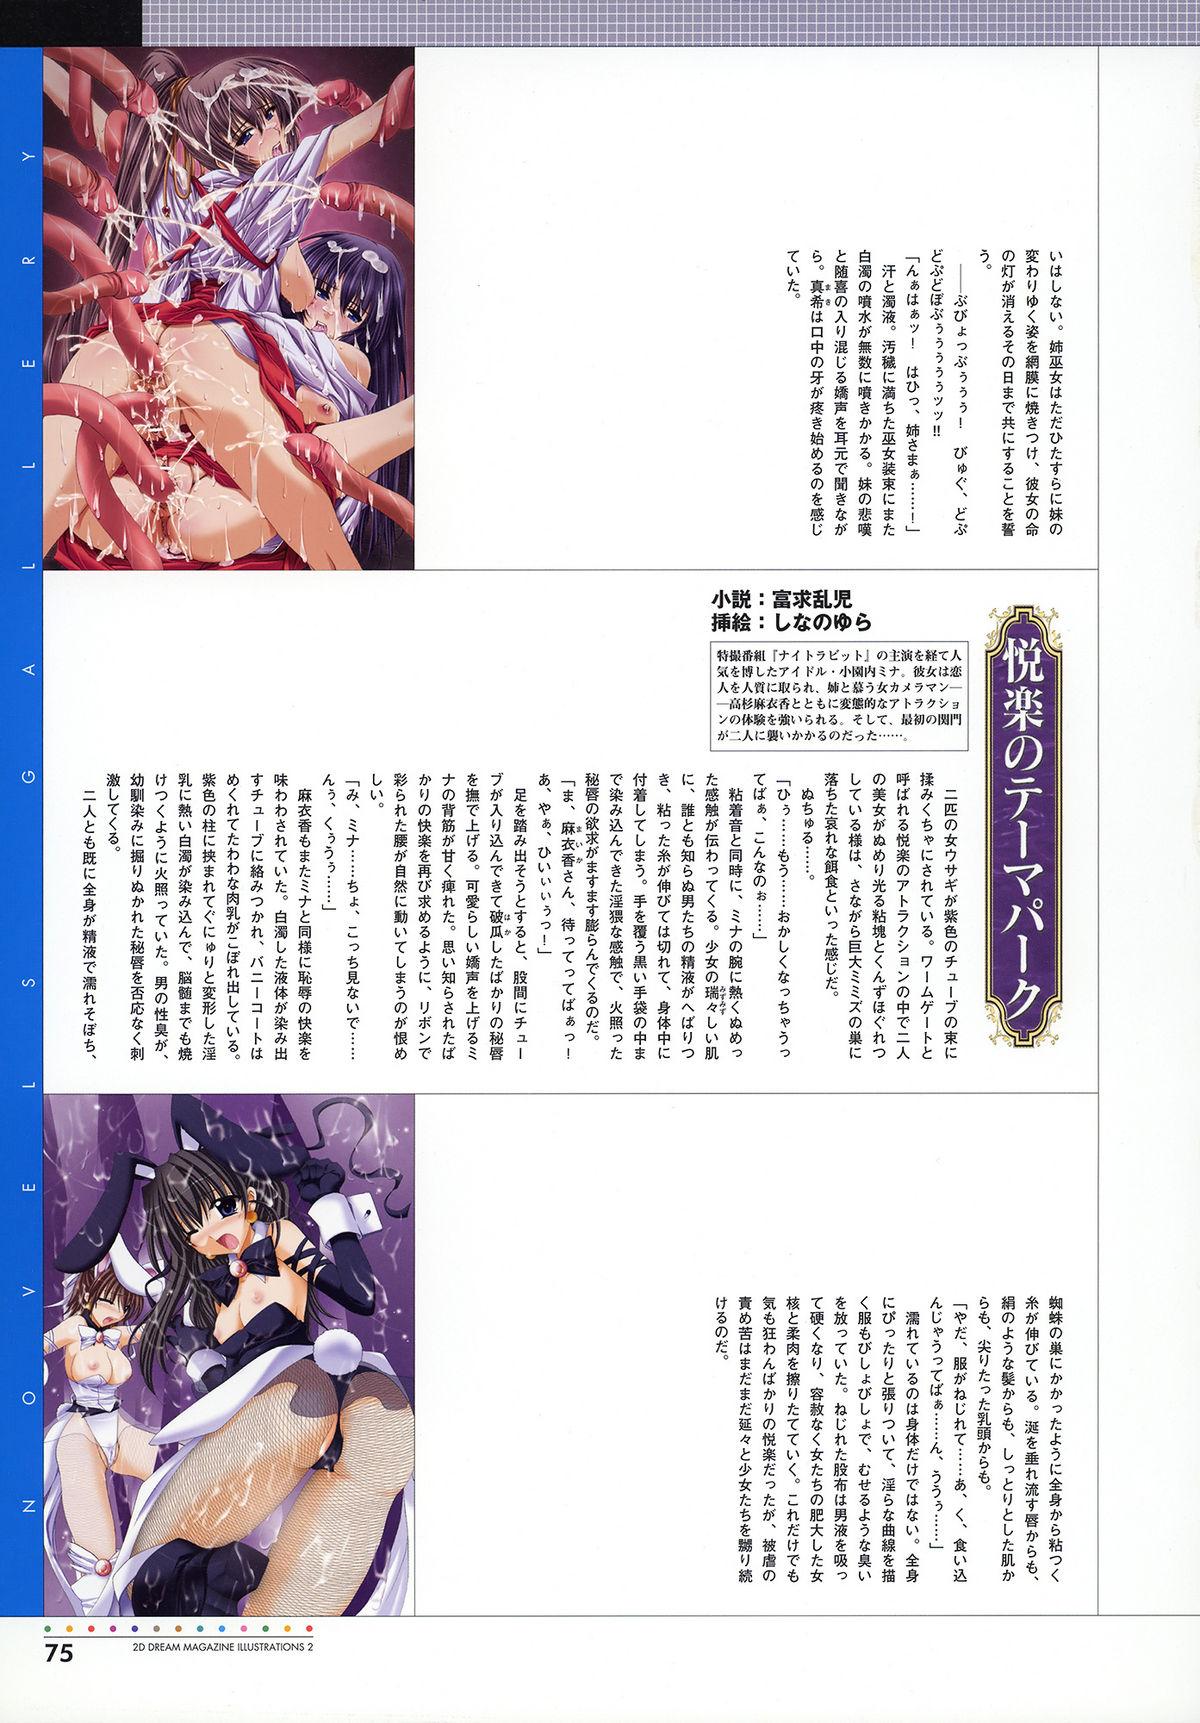 Nijigen Dream Magazine Illustrations #2 76